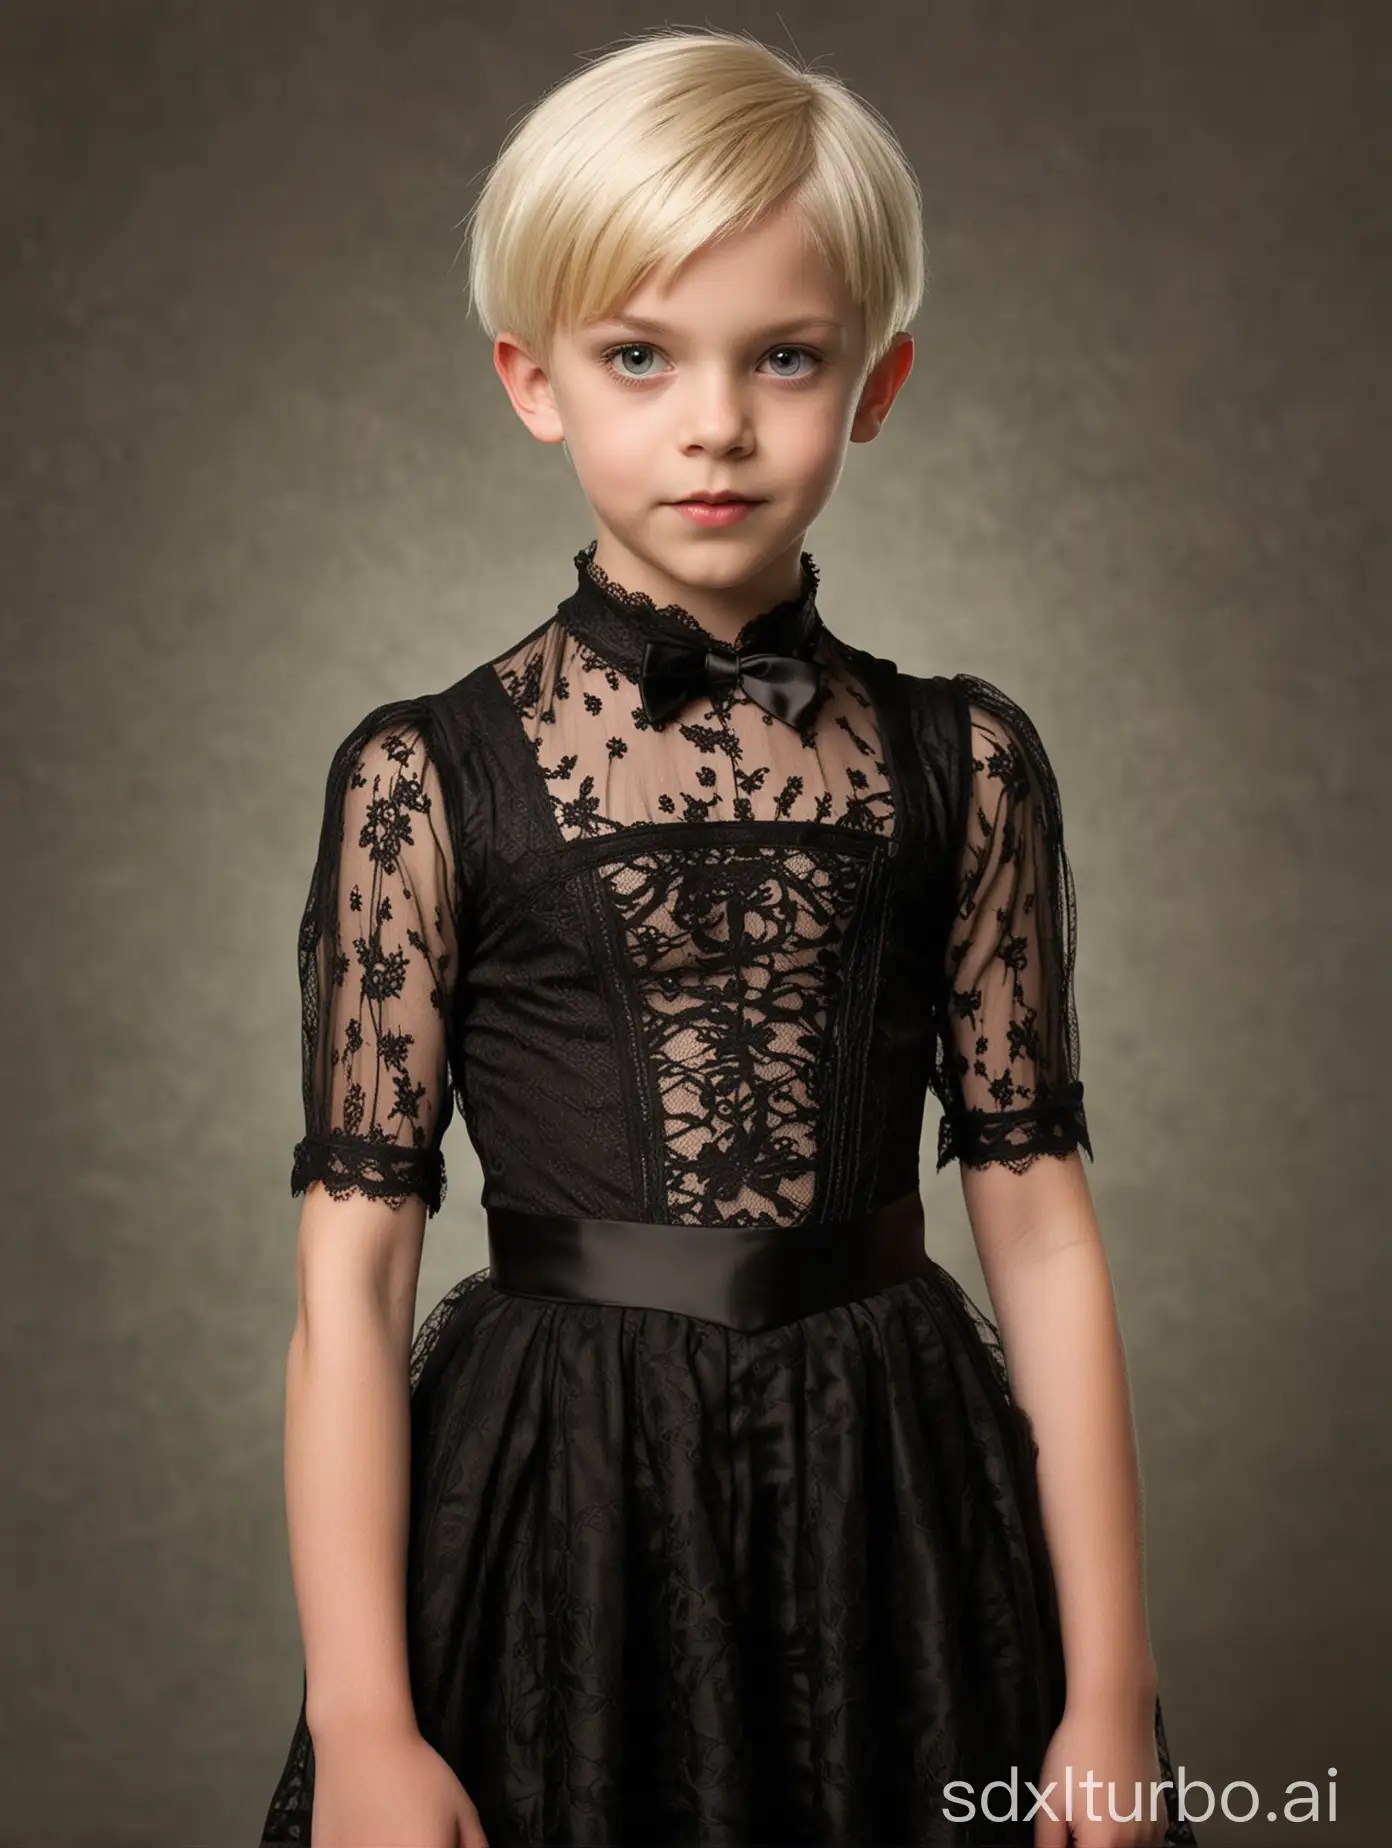 Adorable-Gender-RoleReversal-10YearOld-Blonde-Boy-Dancing-in-Wednesday-Addams-Ballroom-Dress